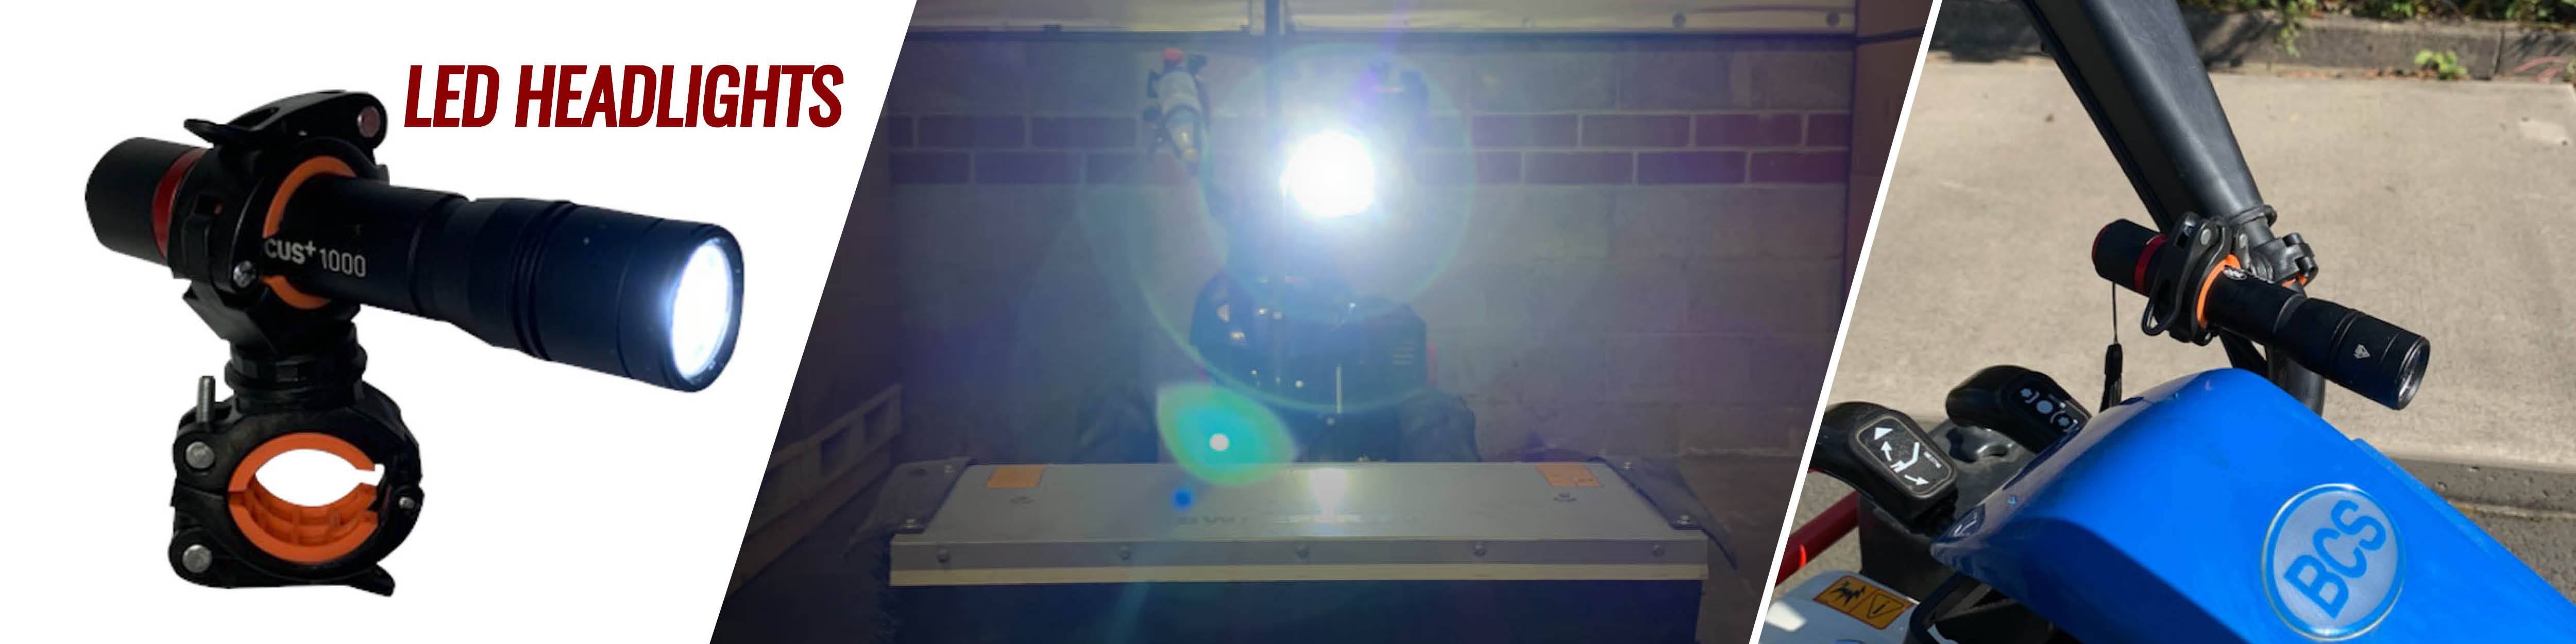 New: Handlebar-Mounted LED Headlights